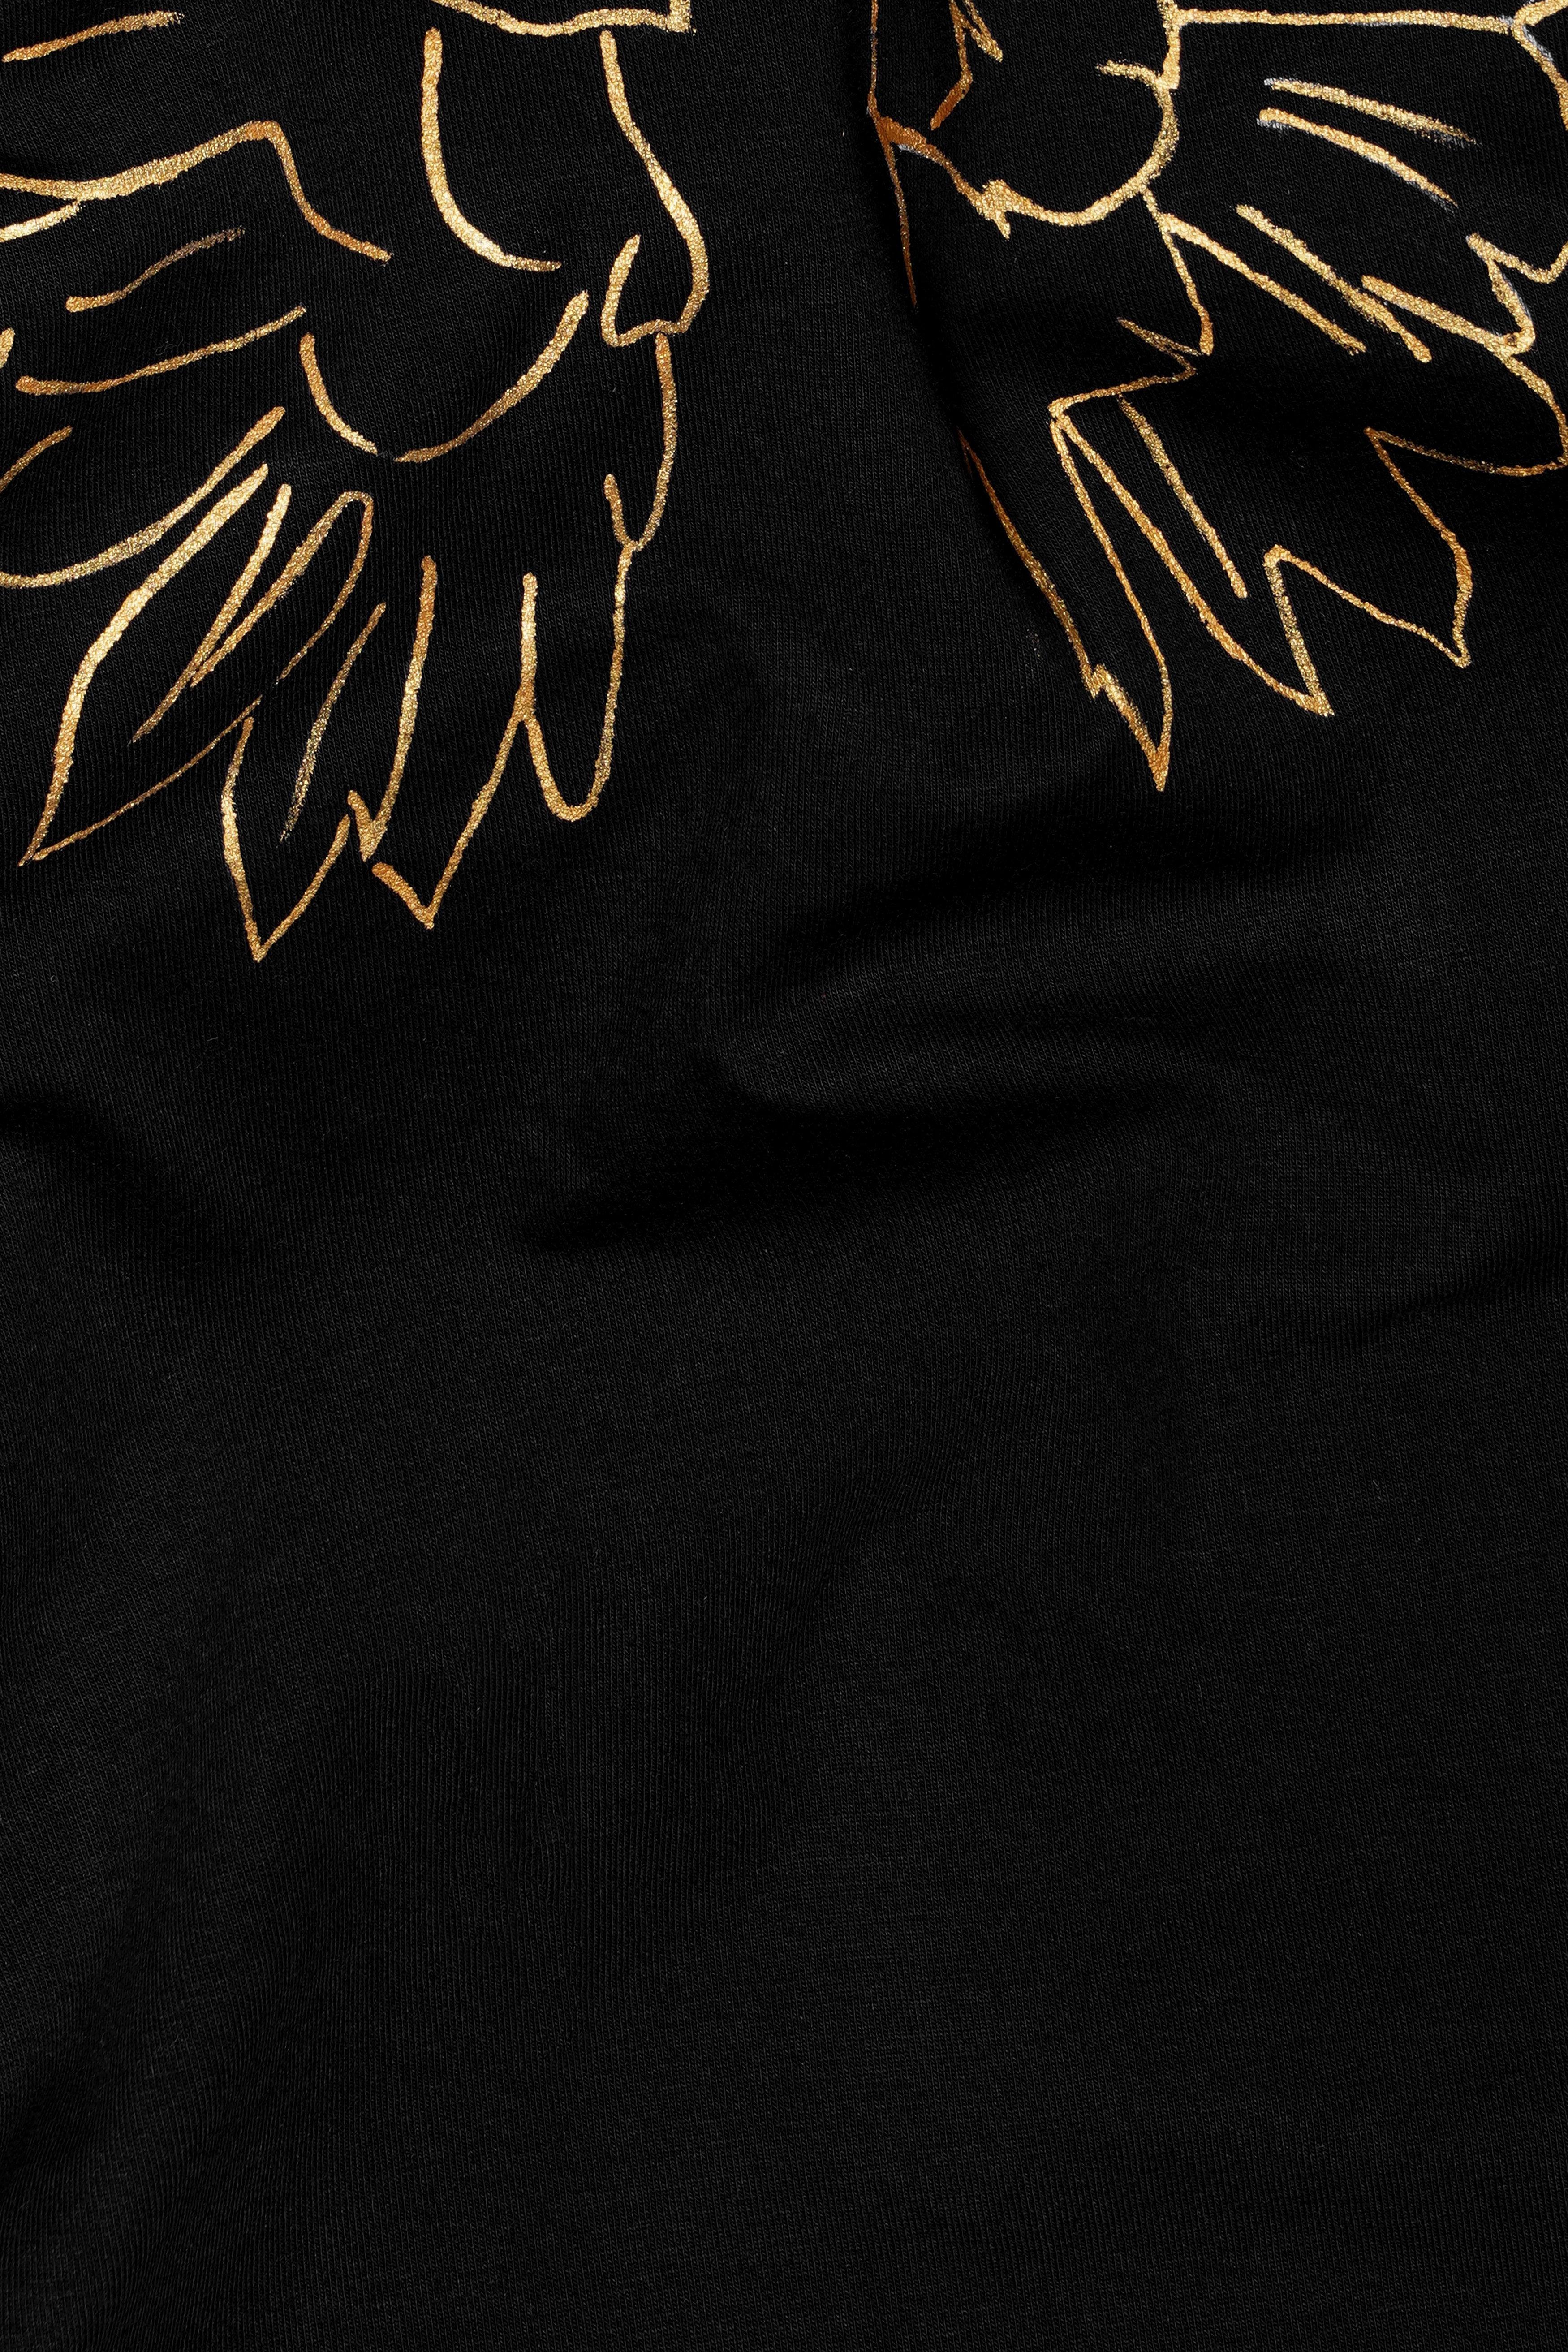 Jade Black Wings Hand Painted Premium Cotton T-shirt TS852-W04-ART-S, TS852-W04-ART-M, TS852-W04-ART-L, TS852-W04-ART-XL, TS852-W04-ART-XXL